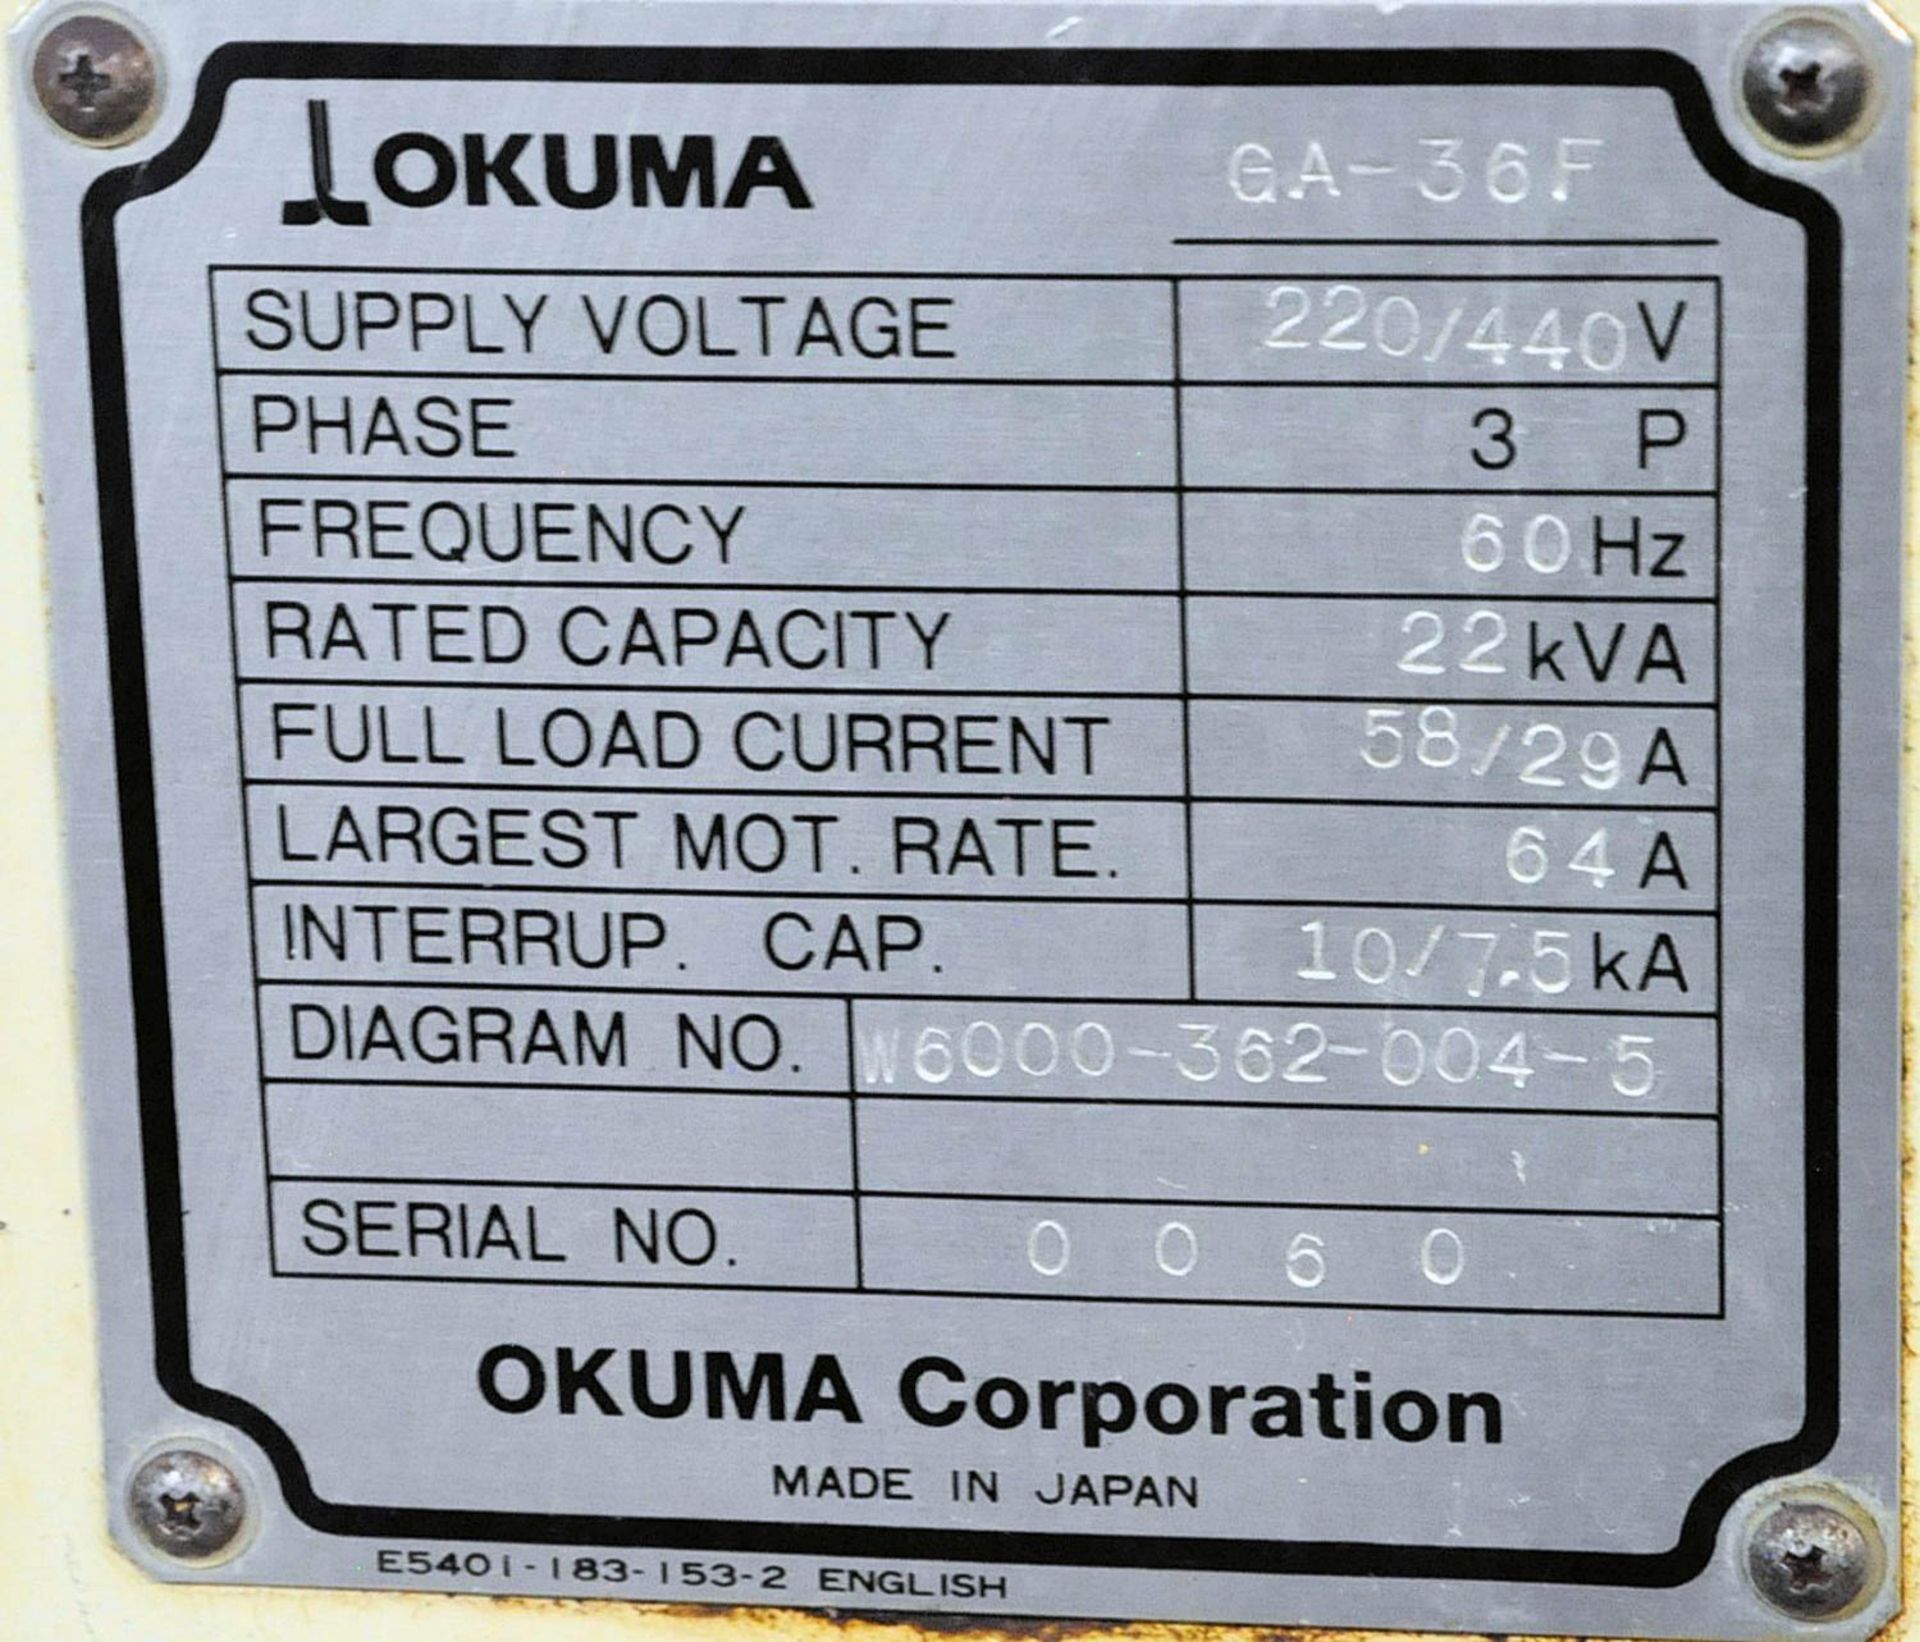 OKUMA MDL. GA-36F, CNC ANGLE APPROACH GRINDER, S/N: 0811.0060 (1996), OKUMA MDL. OSP5020G CNC - Image 6 of 6